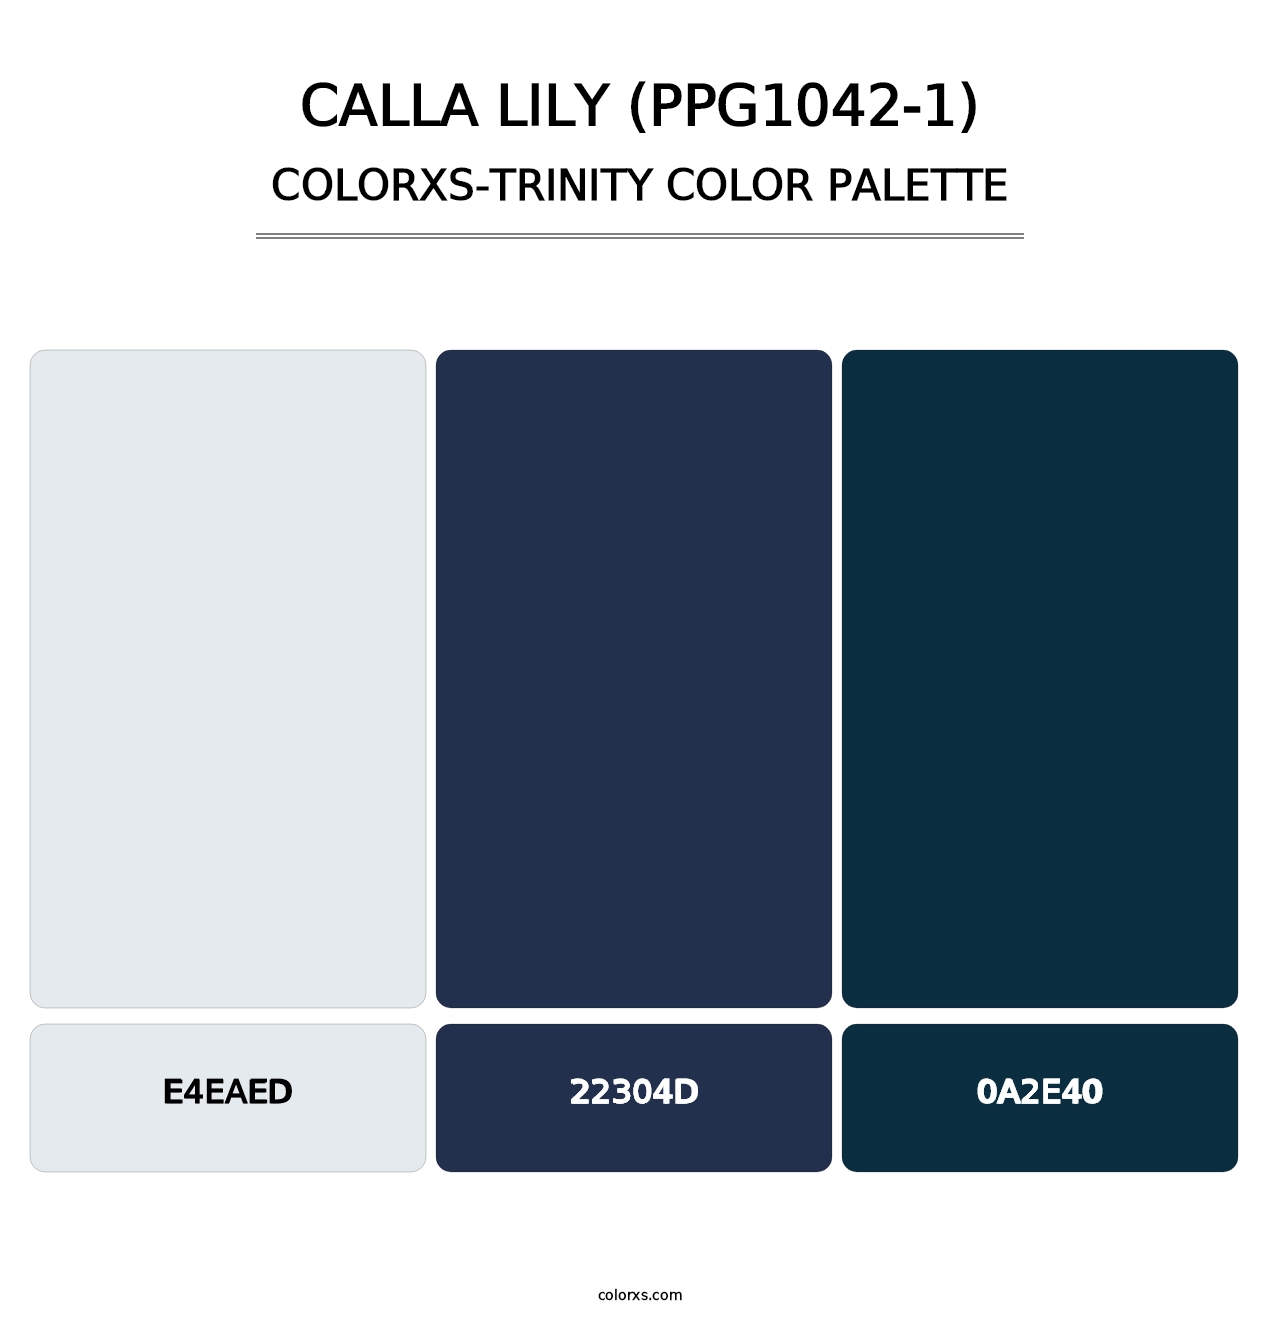 Calla Lily (PPG1042-1) - Colorxs Trinity Palette